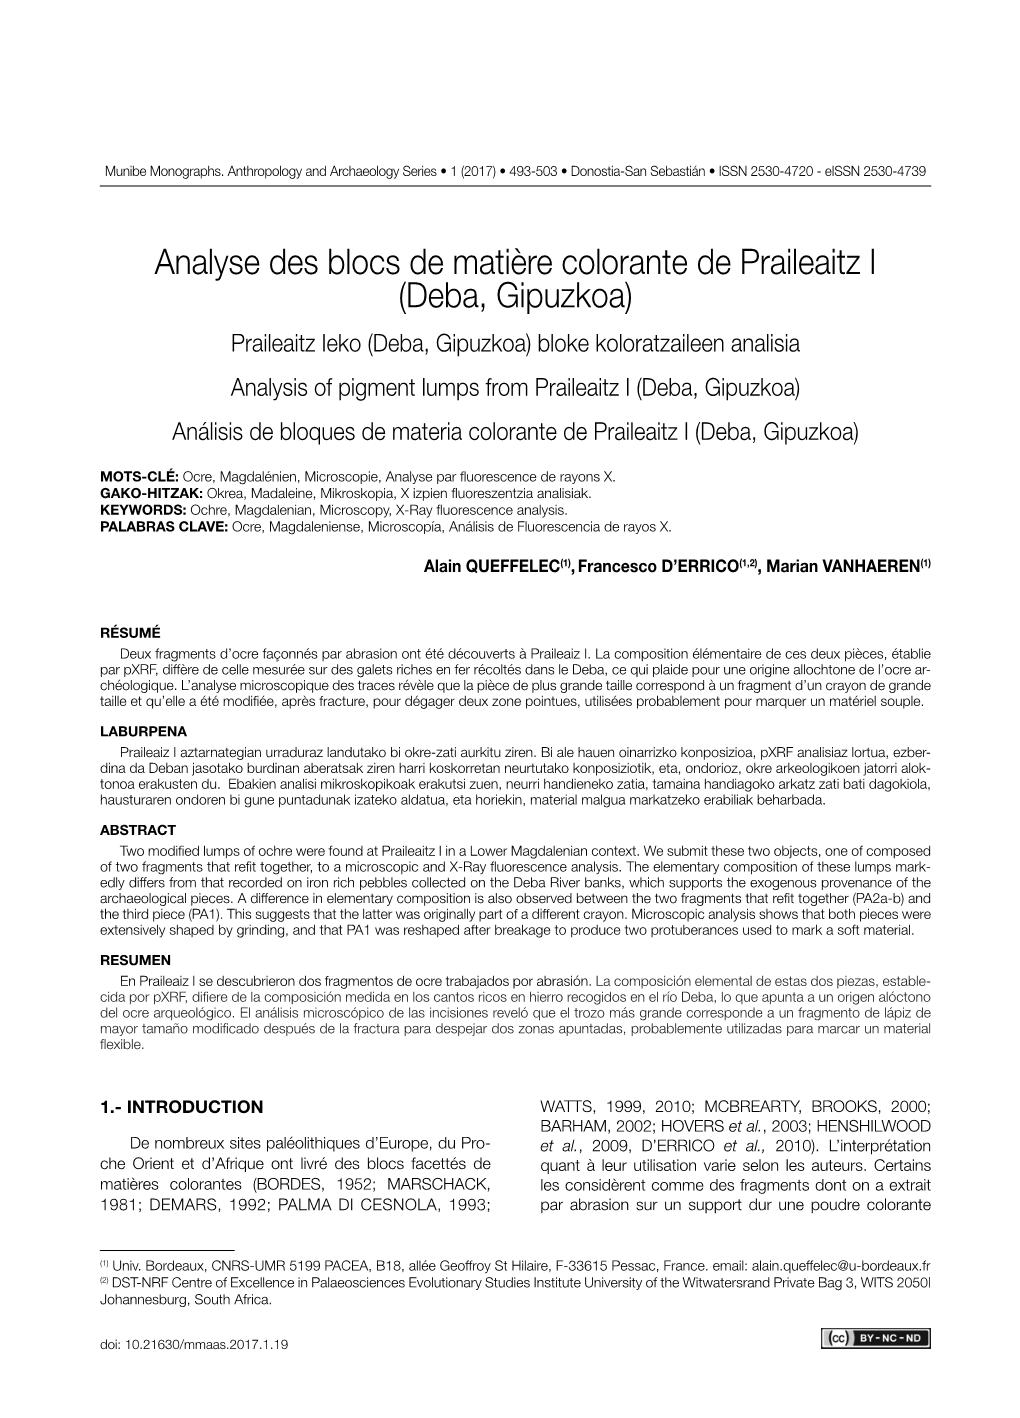 Analyse Des Blocs De Matière Colorante De Praileaitz I (Deba, Gipuzkoa)